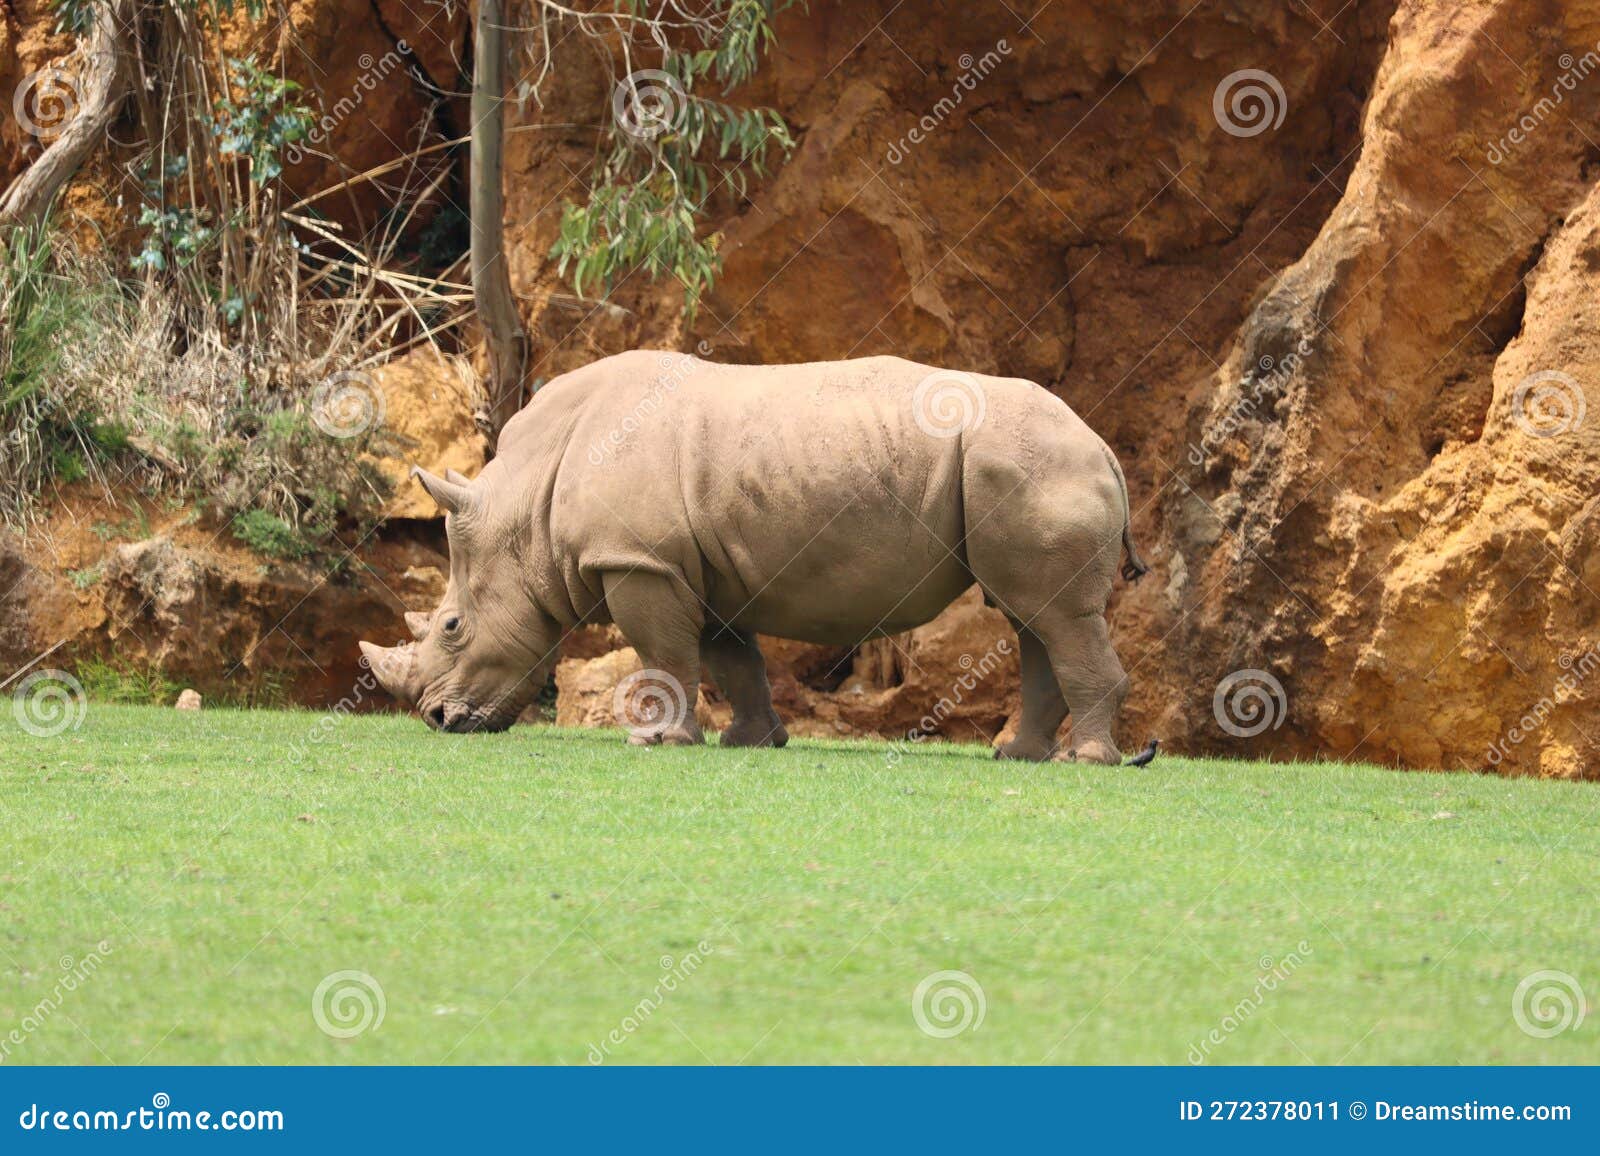 rinoceronte animal zoo safari danger